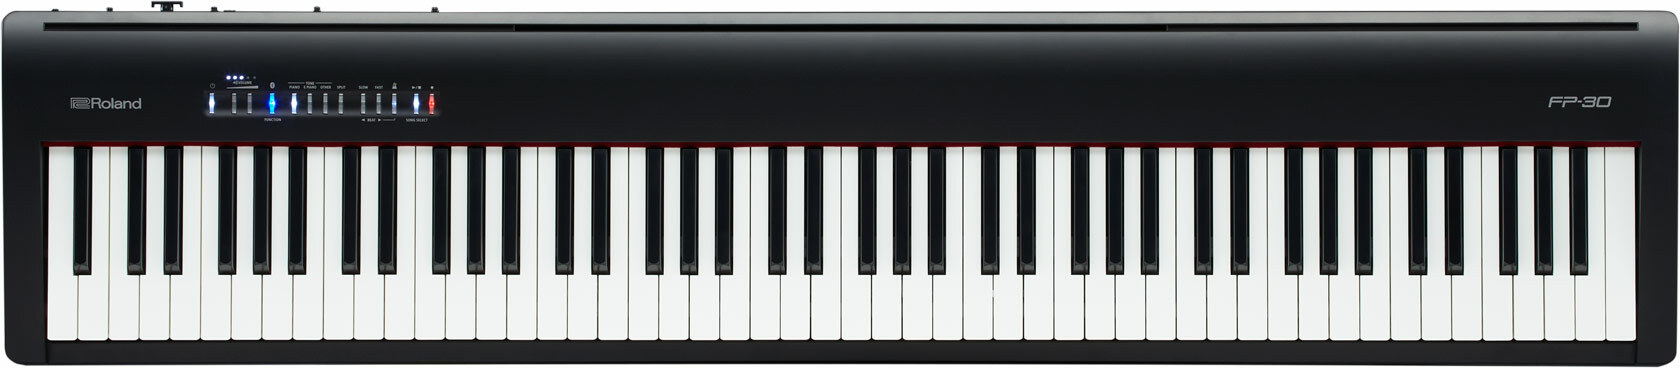 Roland Fp-30 - Black - Portable digital piano - Main picture